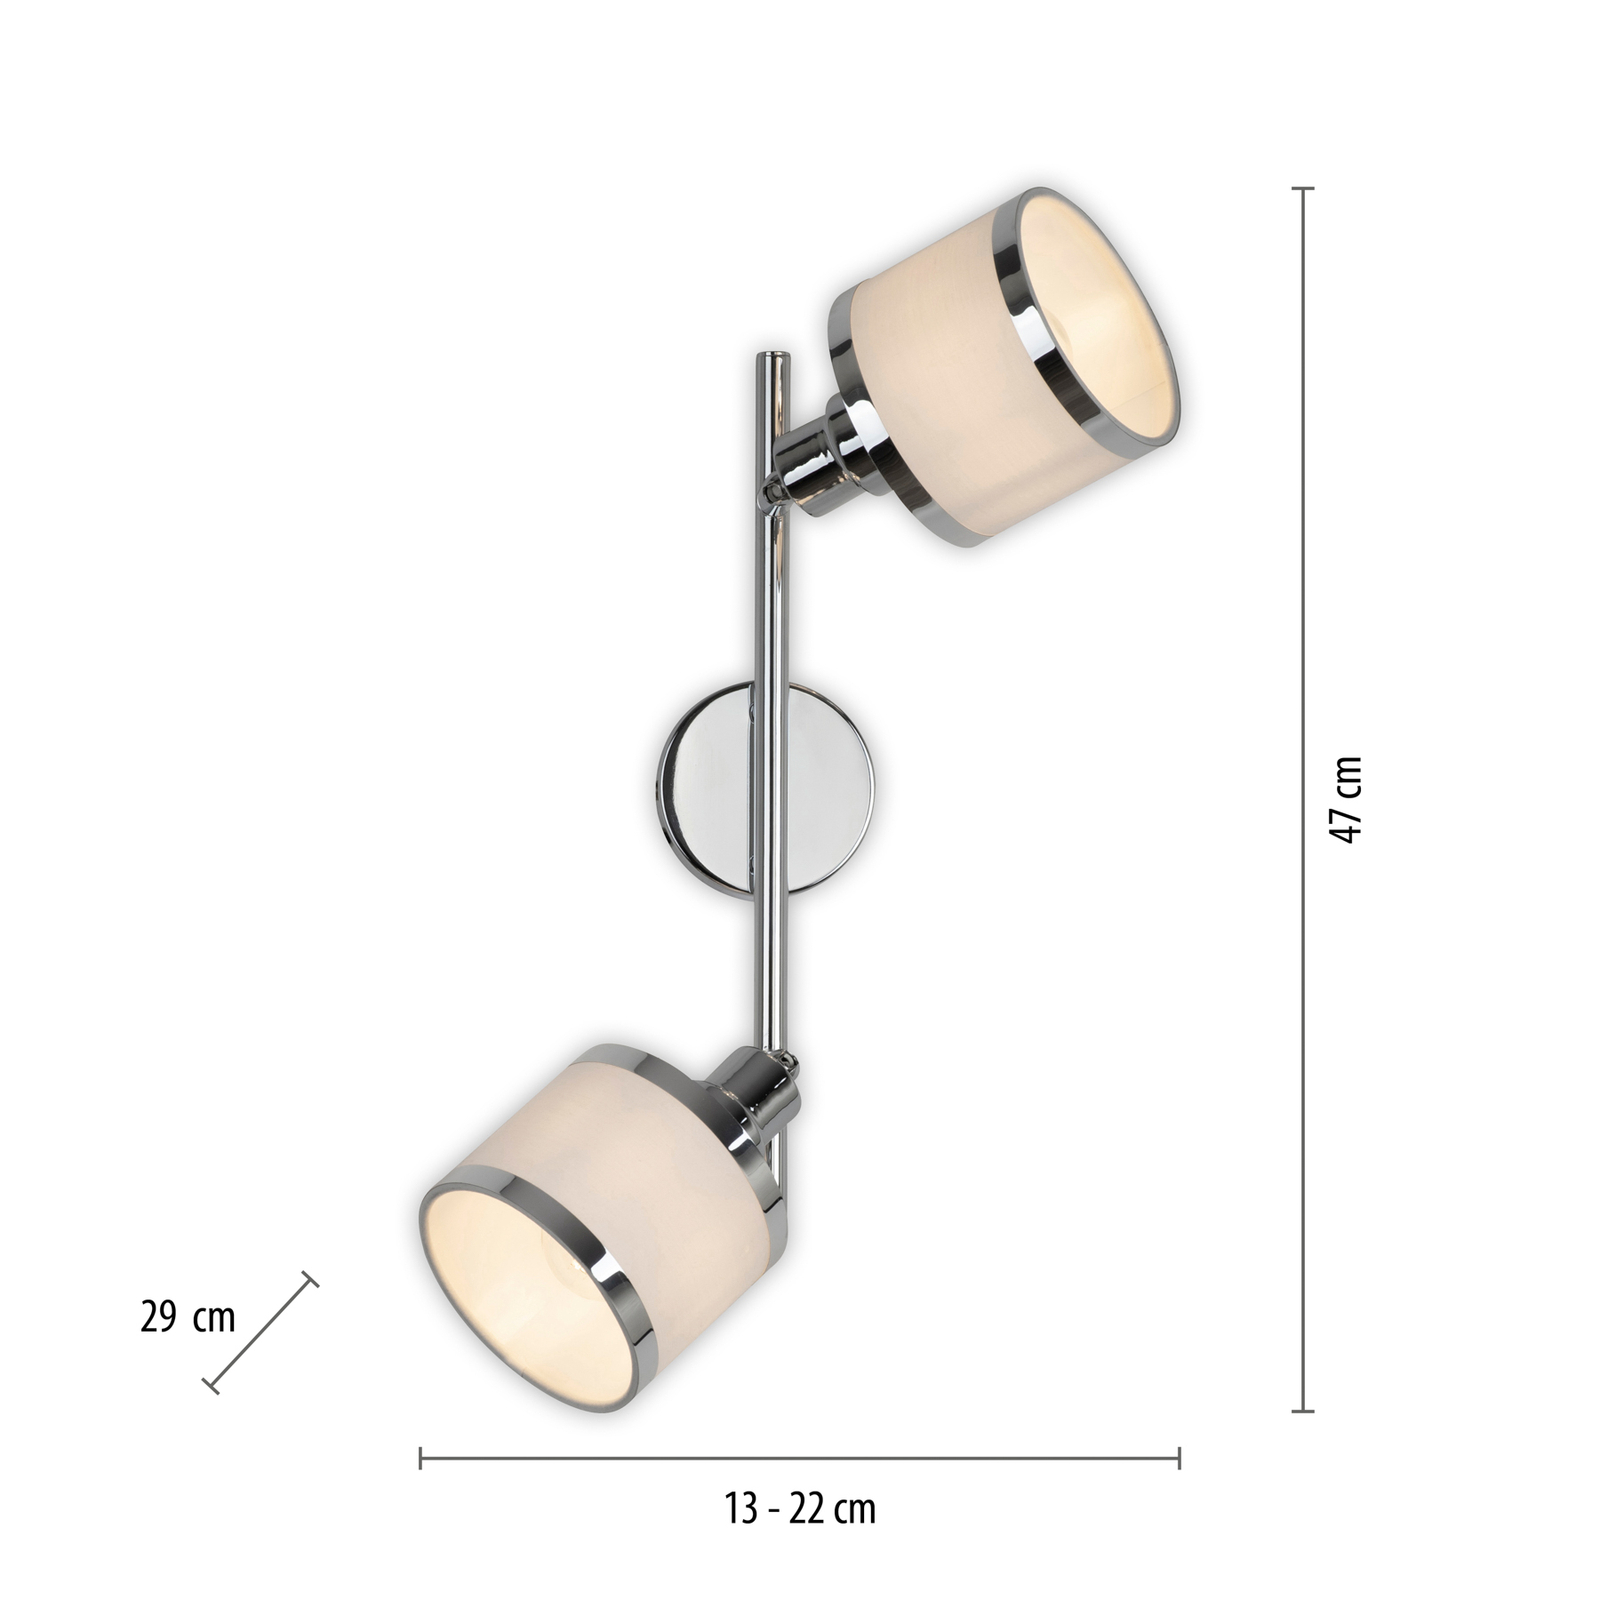 Accor downlight, 2-bulb